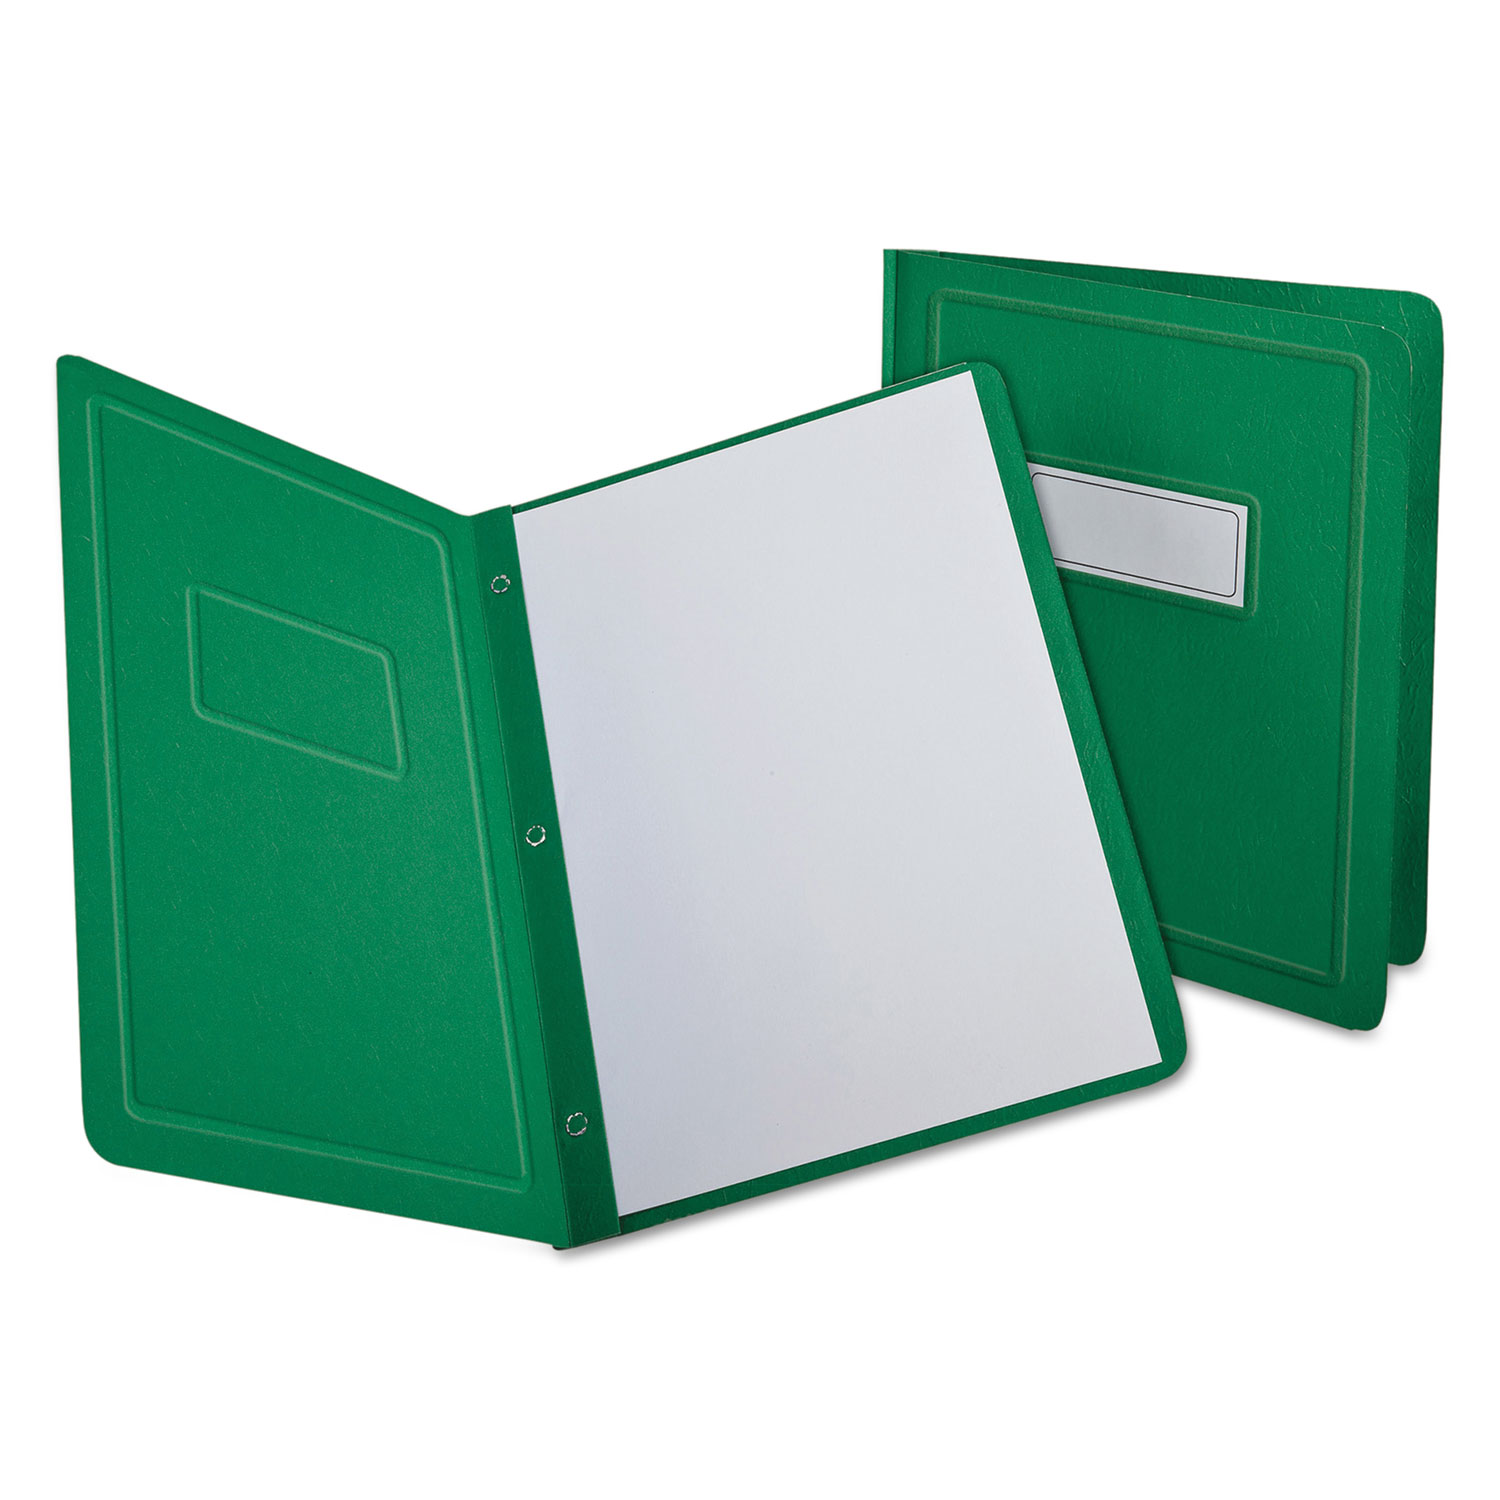 Oxford OXF52503 Report Cover, 3 Fasteners, Panel and Border Cover, Letter, Green, 25 per box